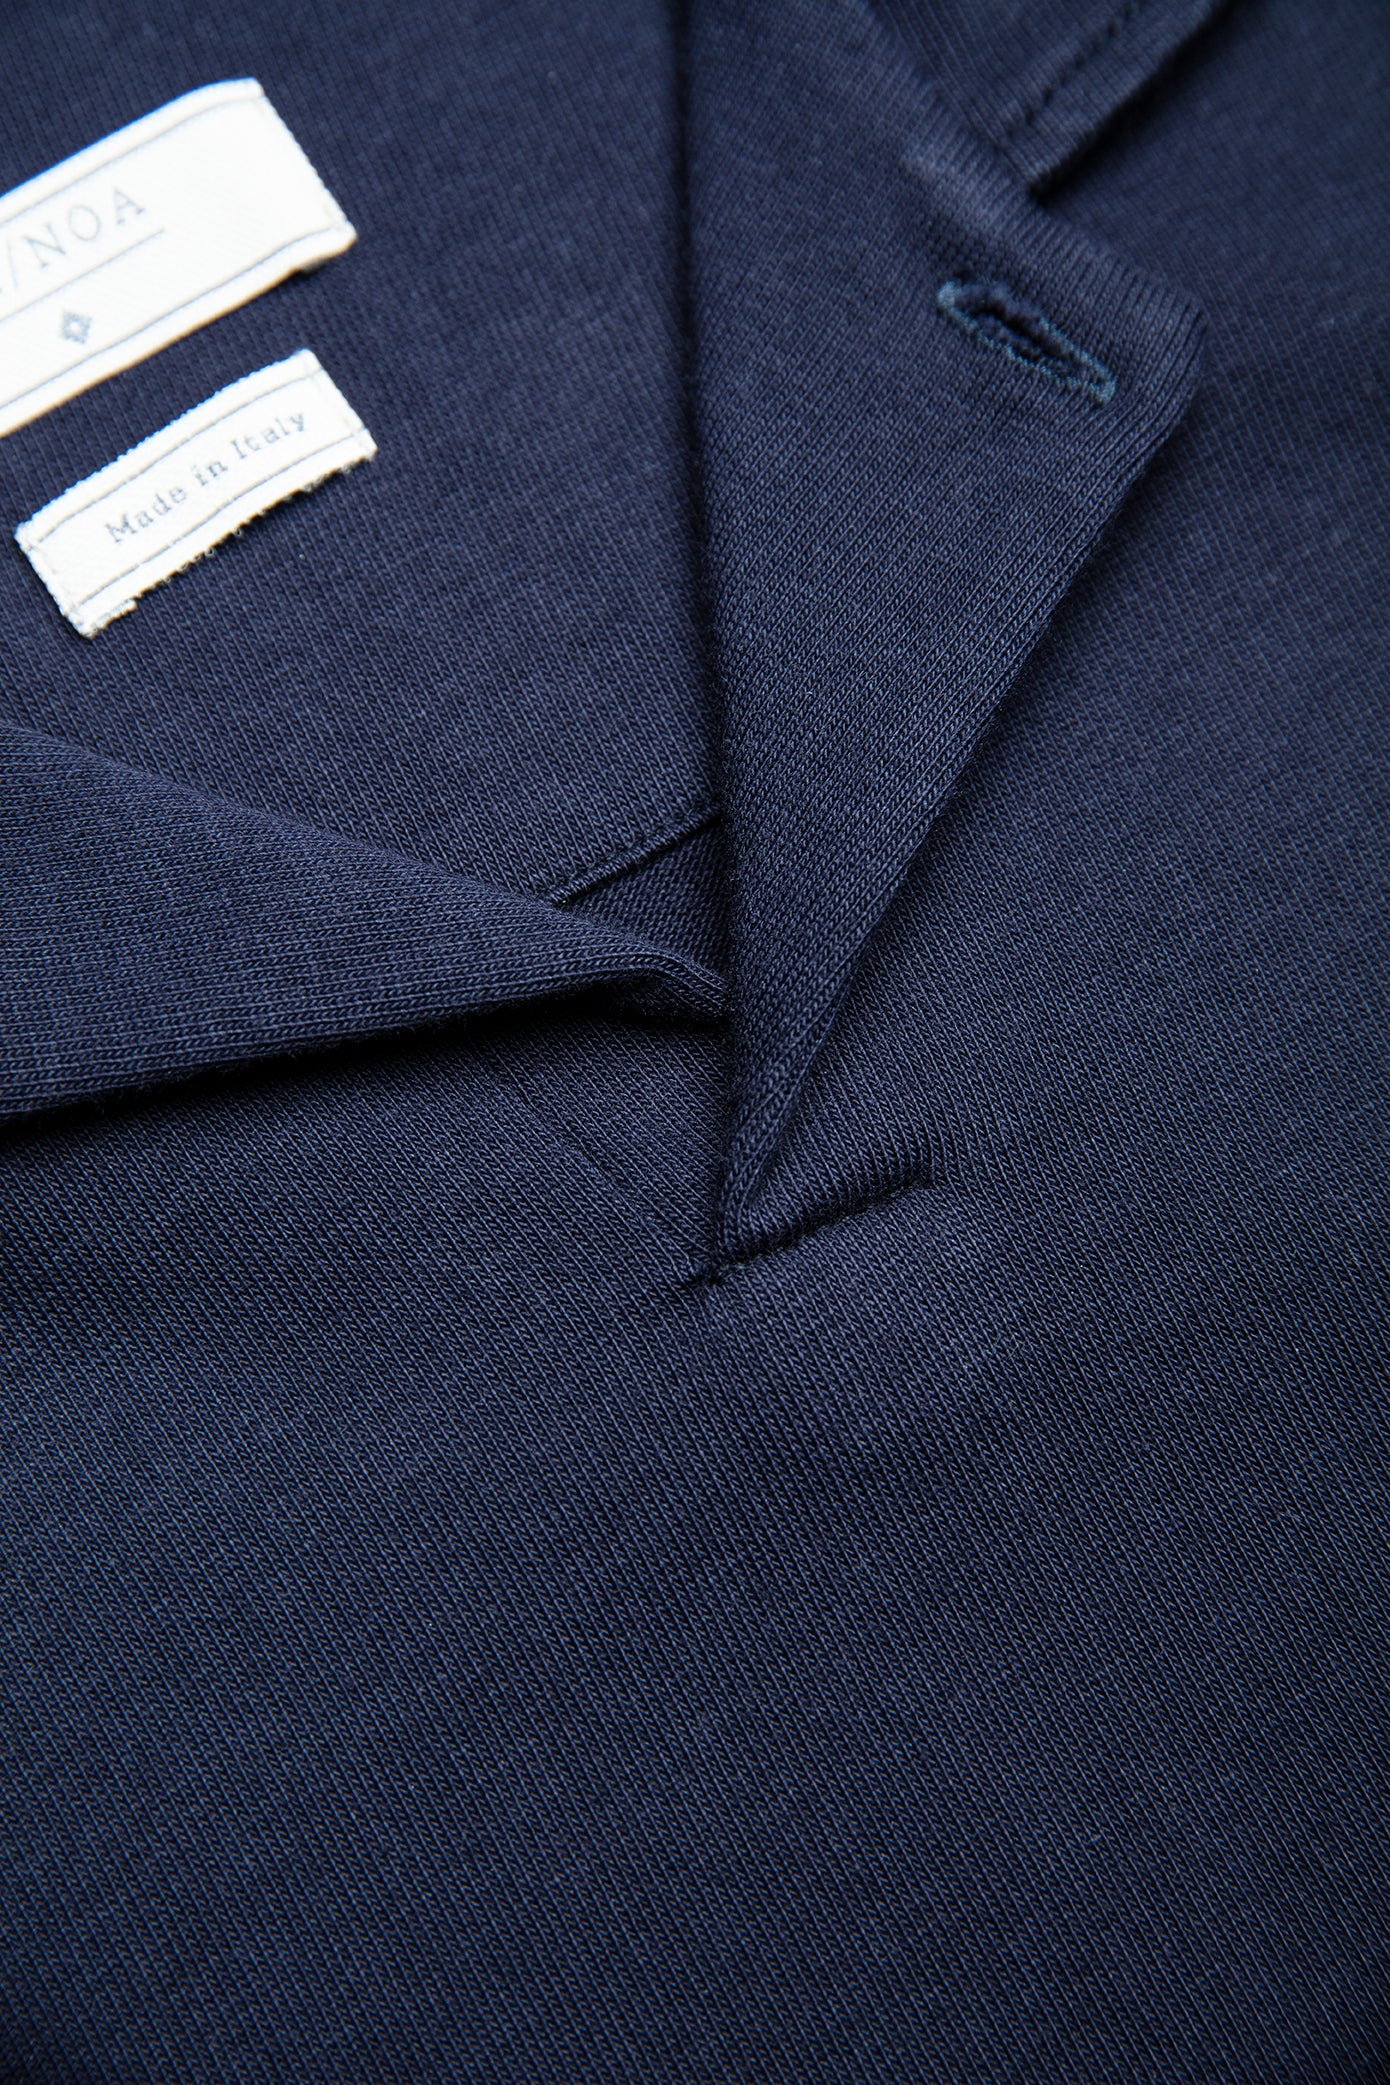 Loran short-sleeved polo in heavy-cotton jersey (dark blue)